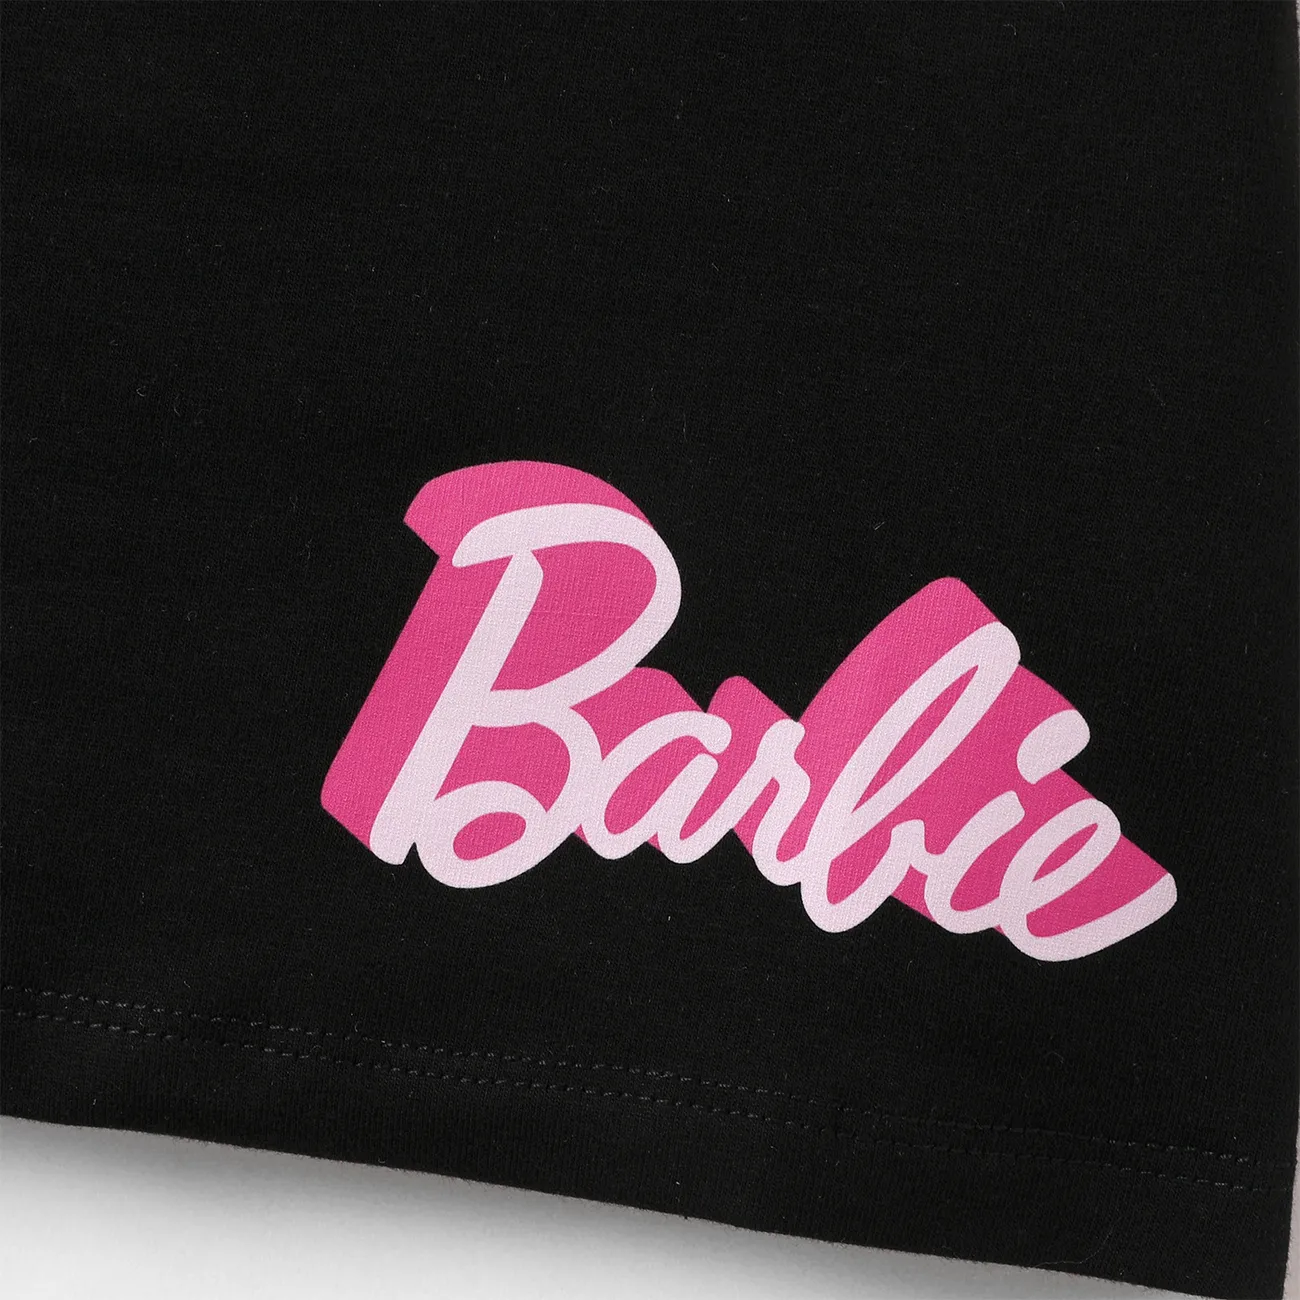 Barbie Toddler/Kid Girl Leopard/Colorblock Print Naia™ Vestido de manga curta com Fanny Pack colorblock big image 1